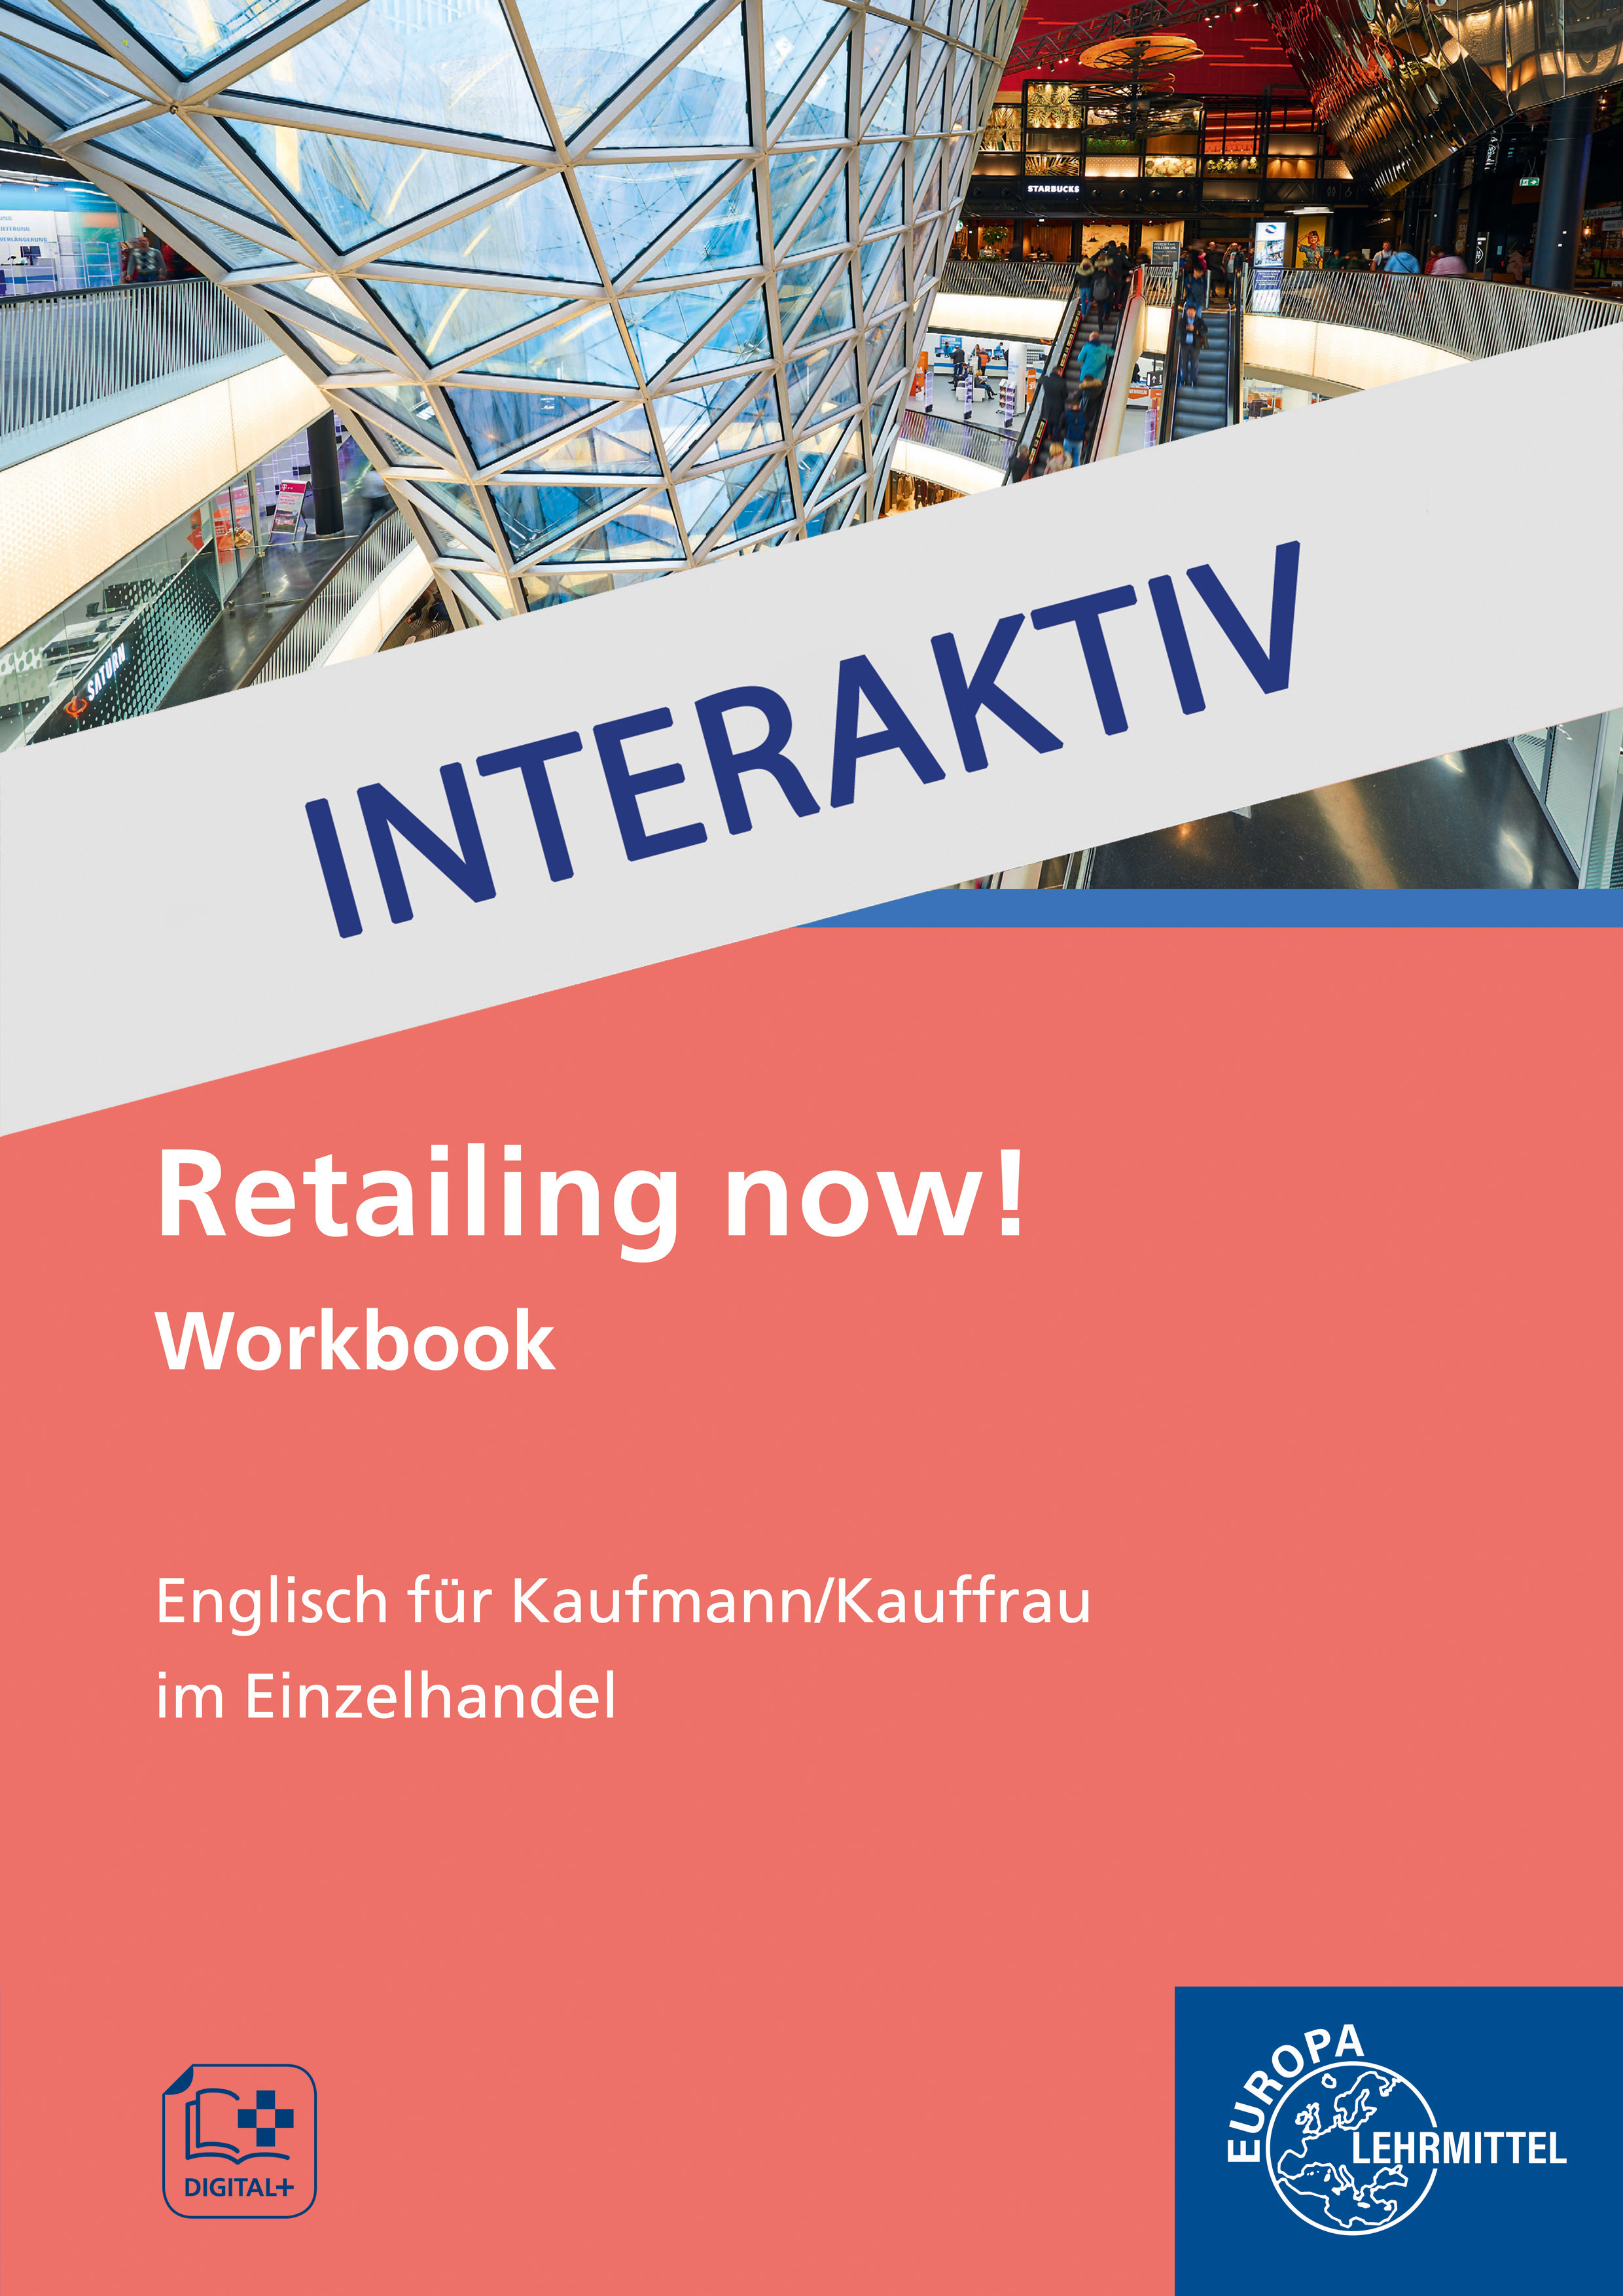 Retailing now! Workbook interaktiv